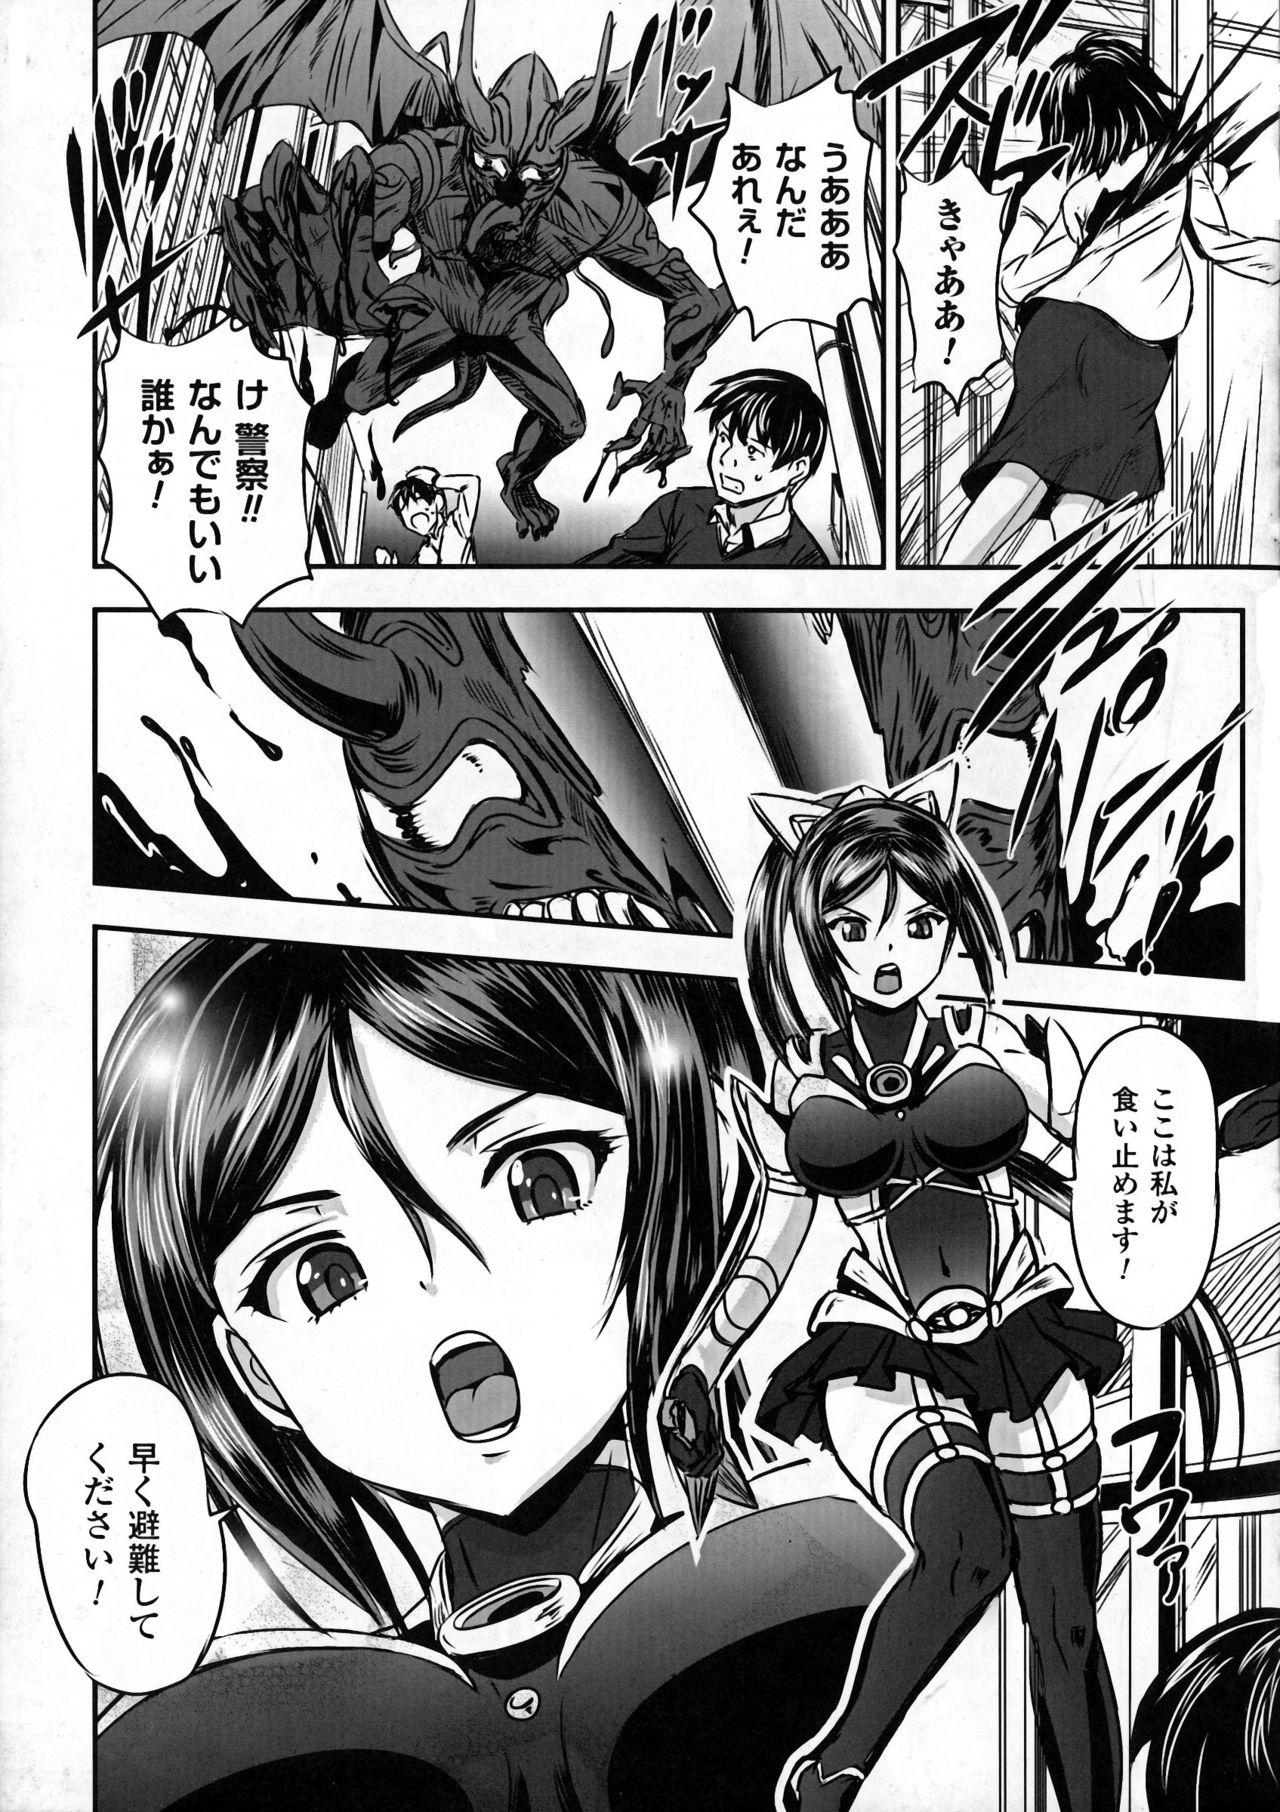 Seigi no Heroine Kangoku File DX vol. 5 140